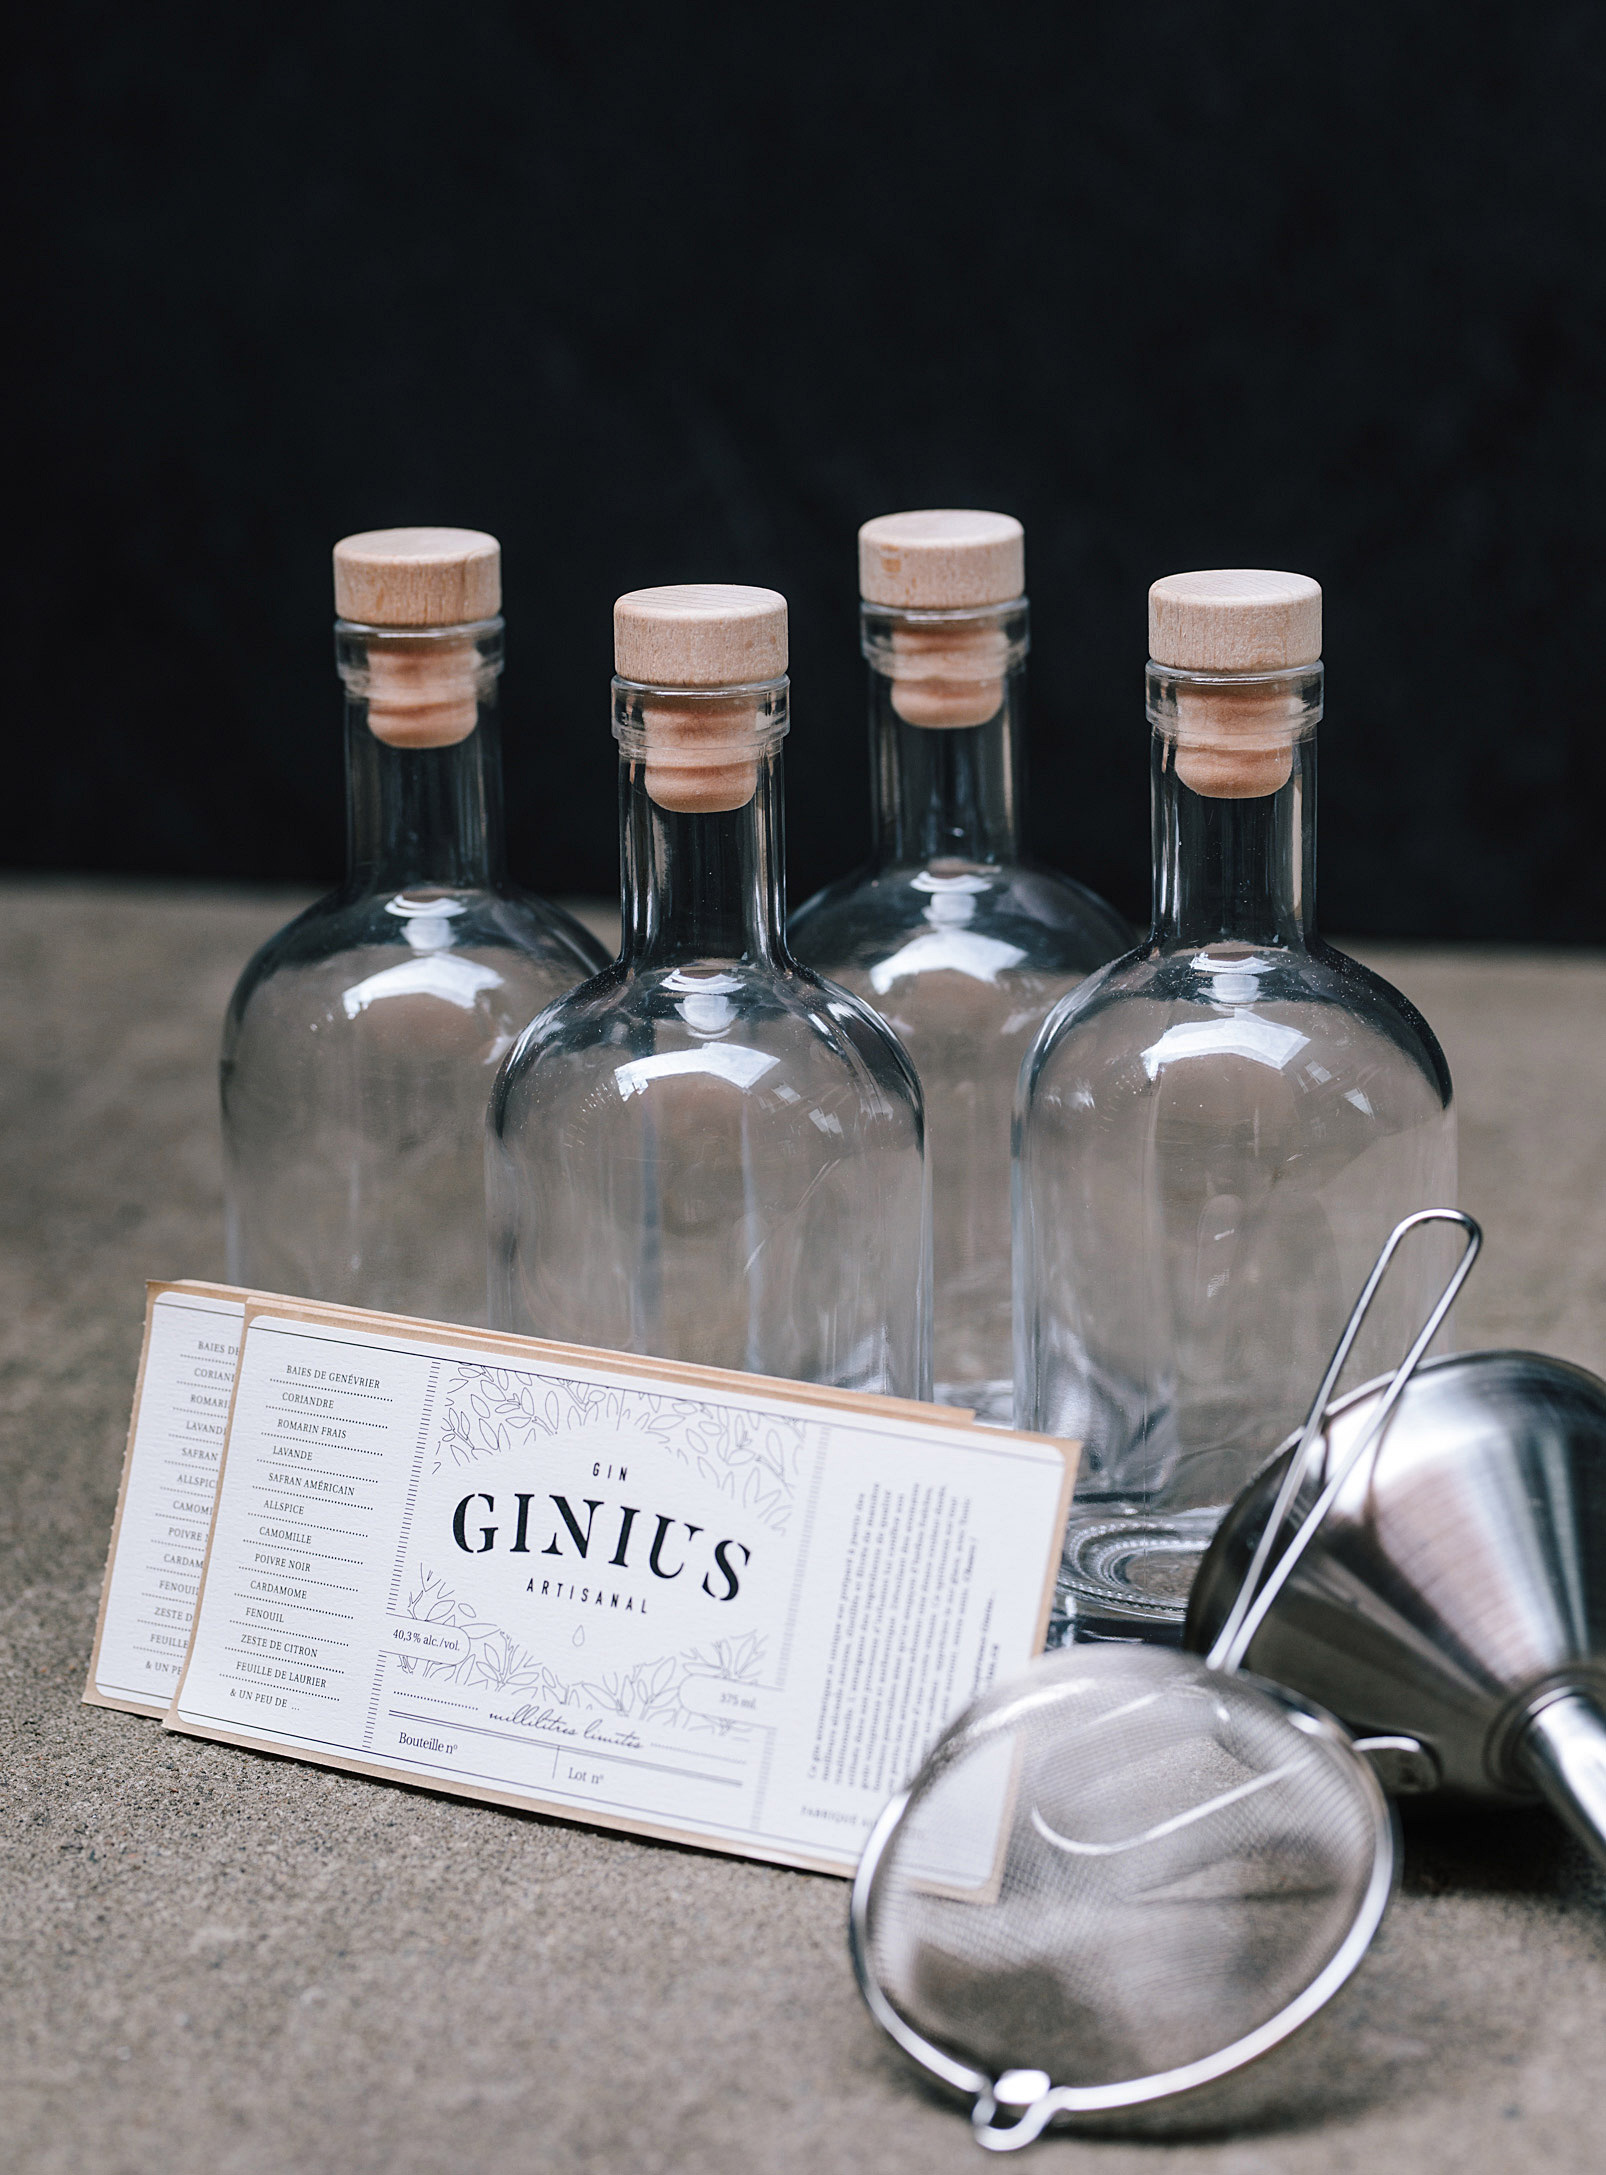 Ginius - Homemade gin production increase set